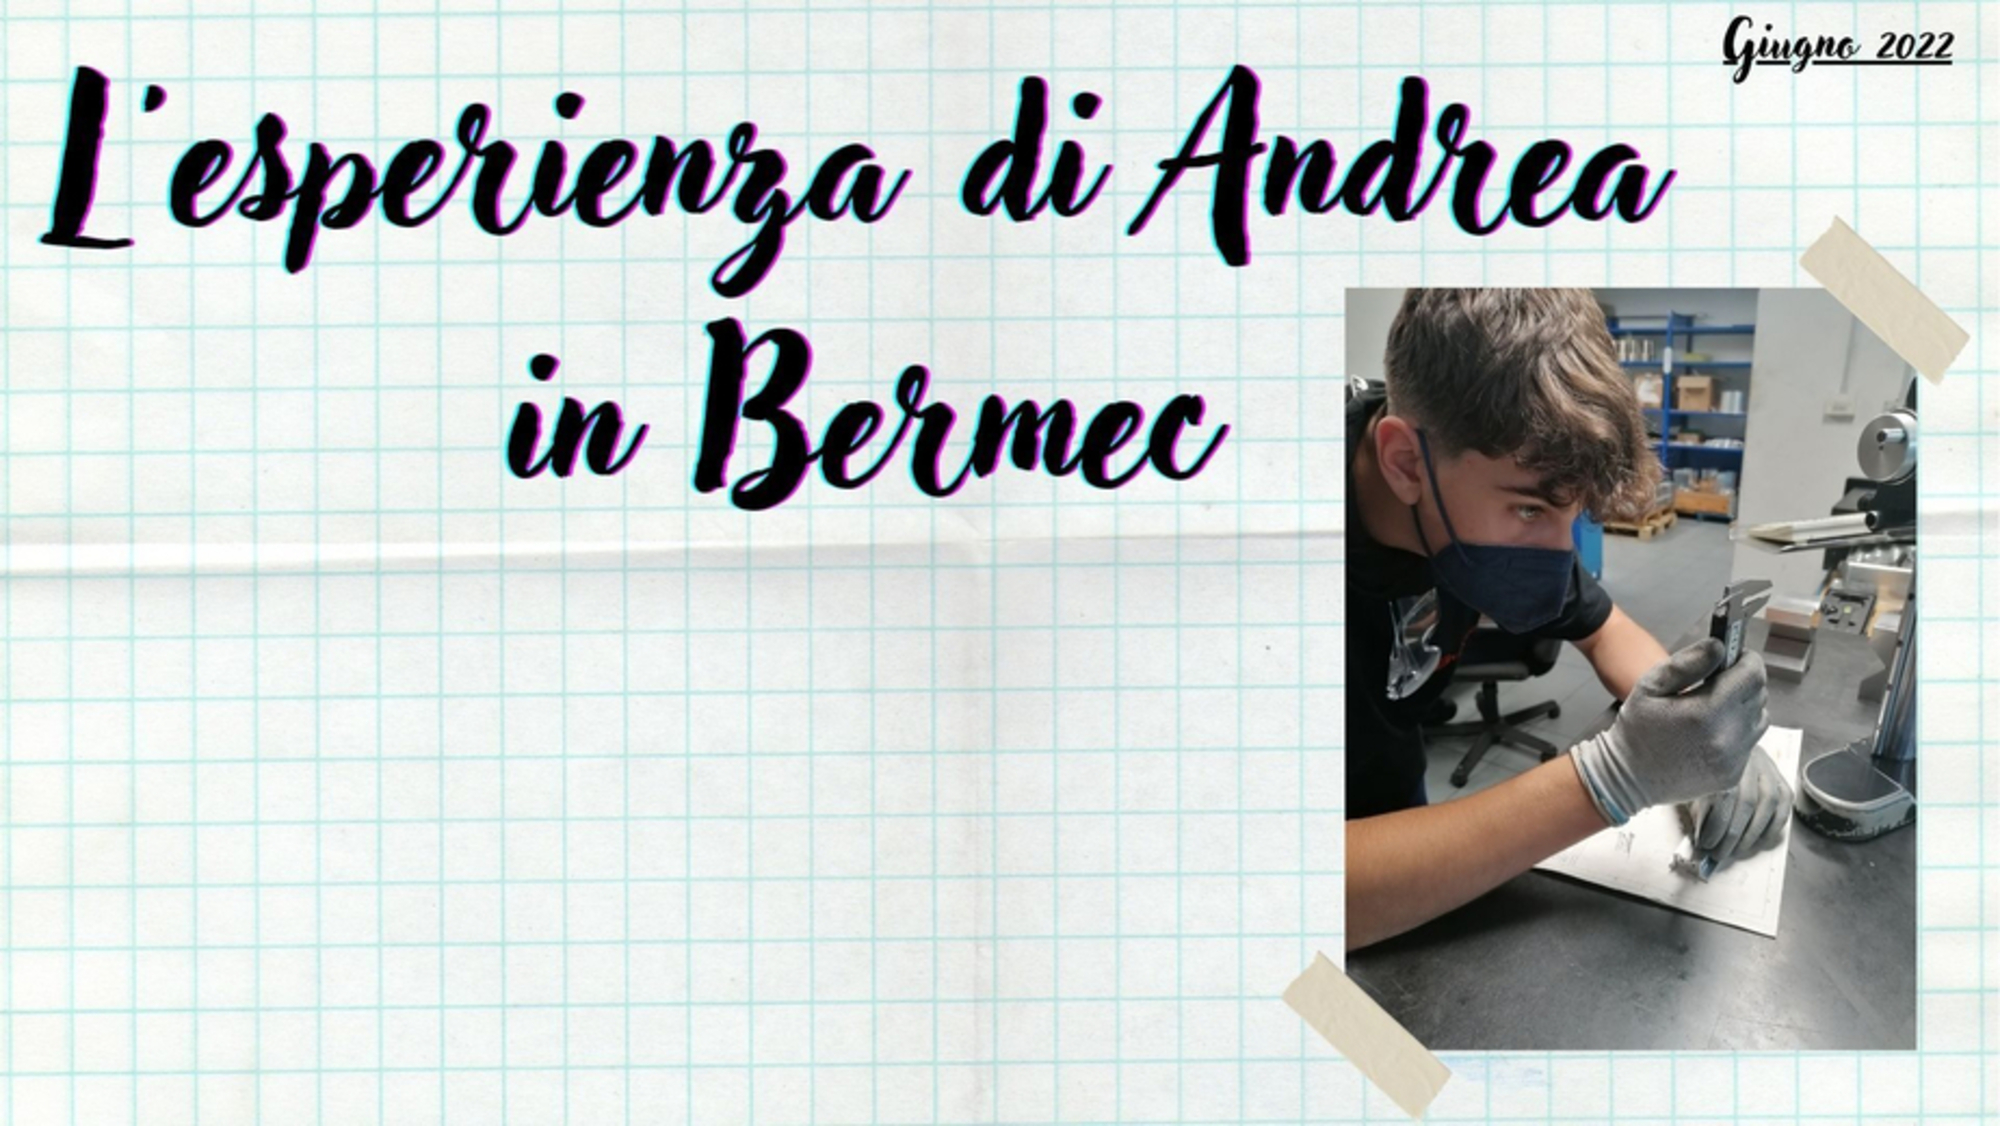 L'esperienza di Andrea G. in Bermec